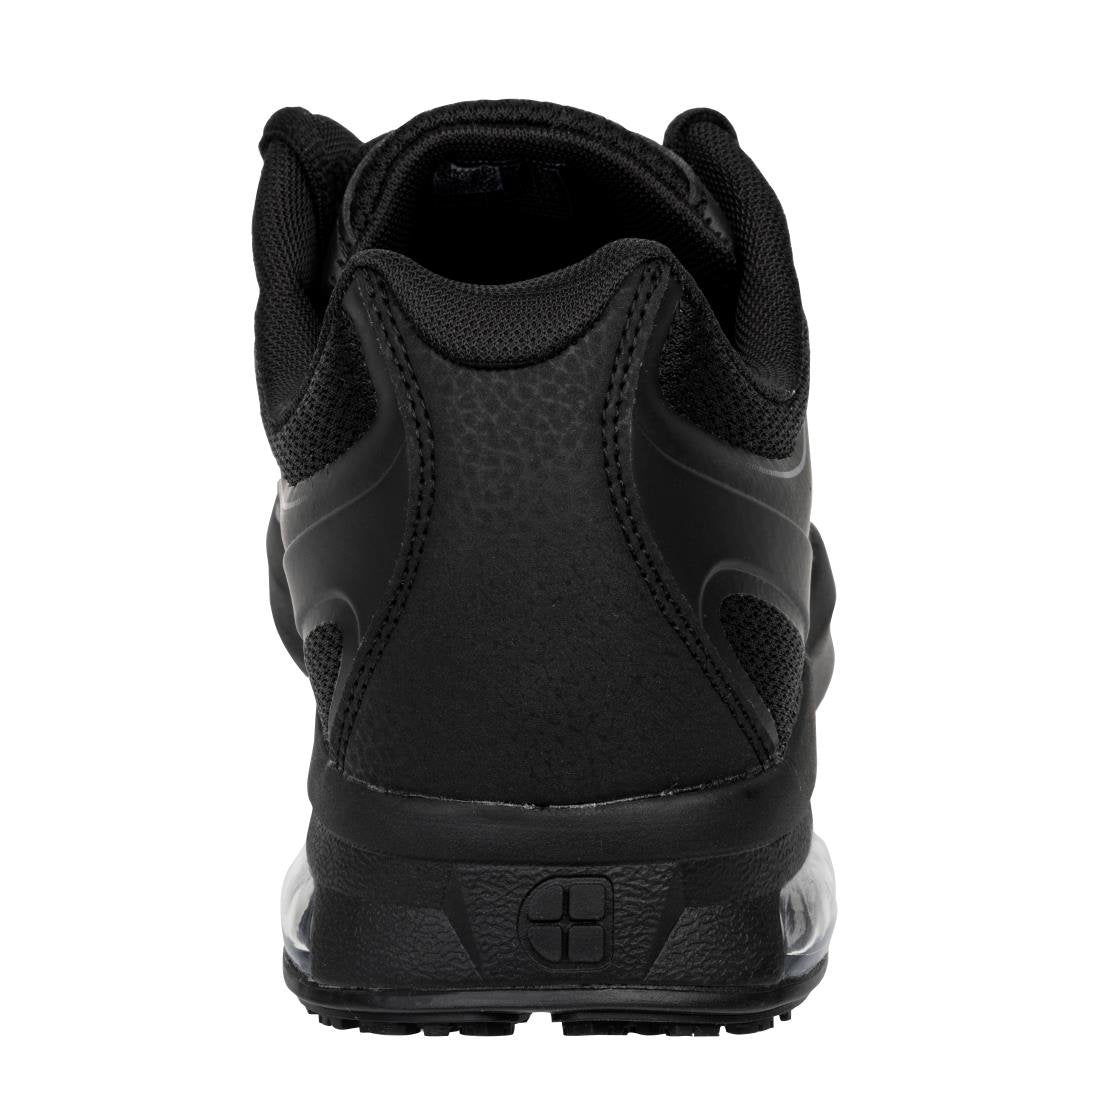 BB586-48 Shoes for Crews Men's Evolution Trainers Black Size 48